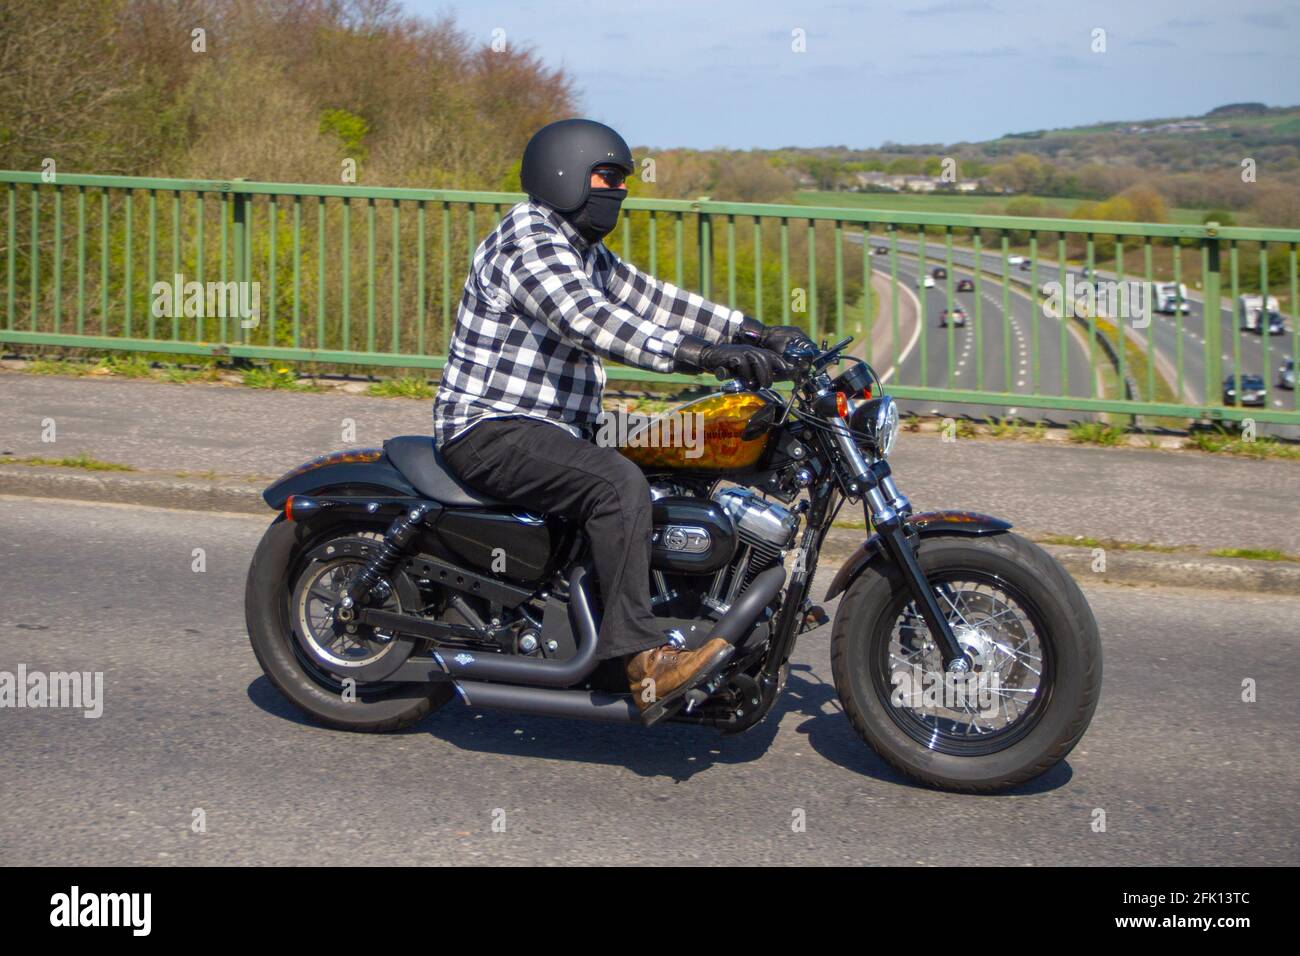 2011 Harley Davidson Xl1200 cuarenta y ocho; motociclista; transporte de dos ruedas, motocicletas, vehículos en carreteras británicas, motocicletas, motociclistas motorizados en Manchester, Reino Unido Foto de stock